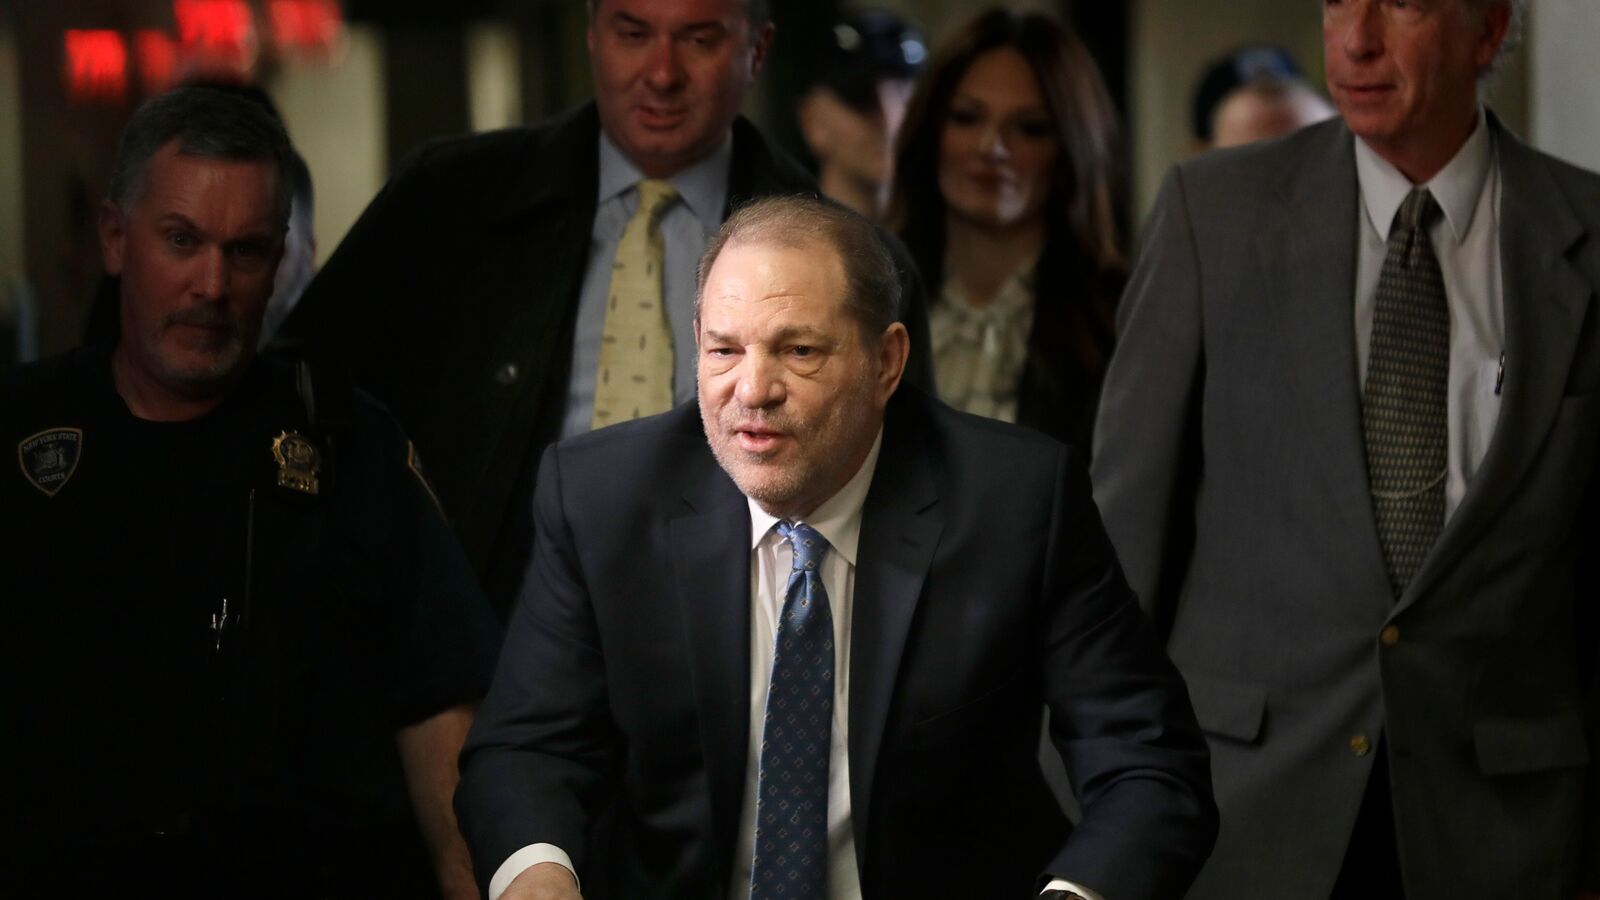 Why did New York court overturn Harvey Weinstein's sexual assault conviction?